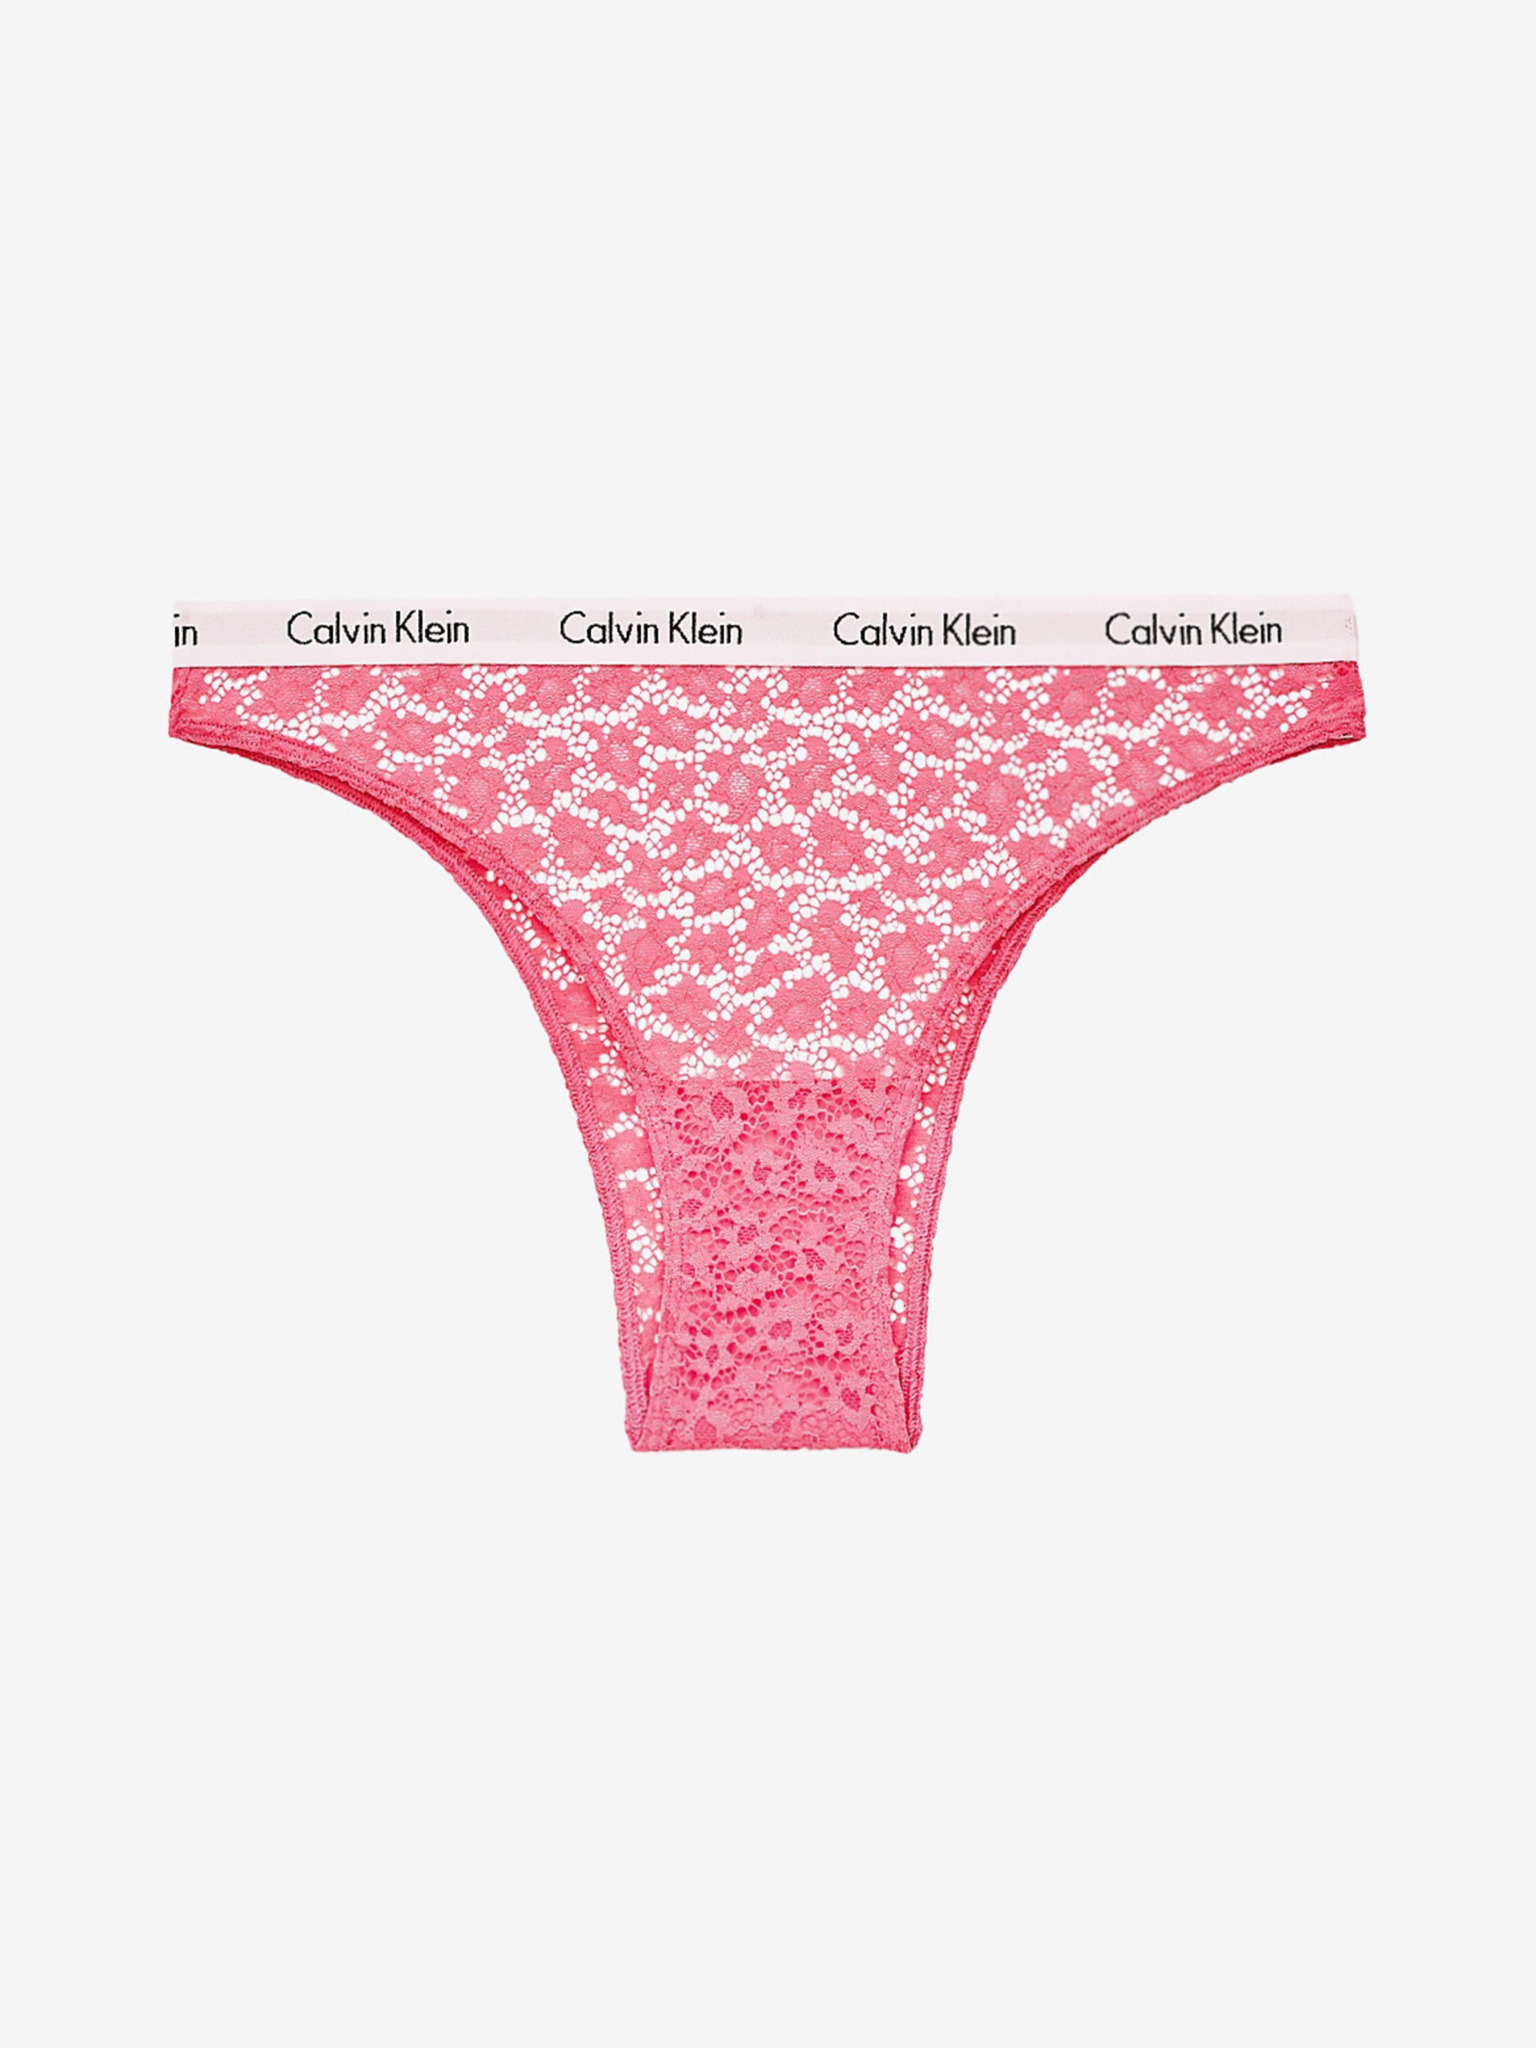 Calvin Klein Lace Panties for Women